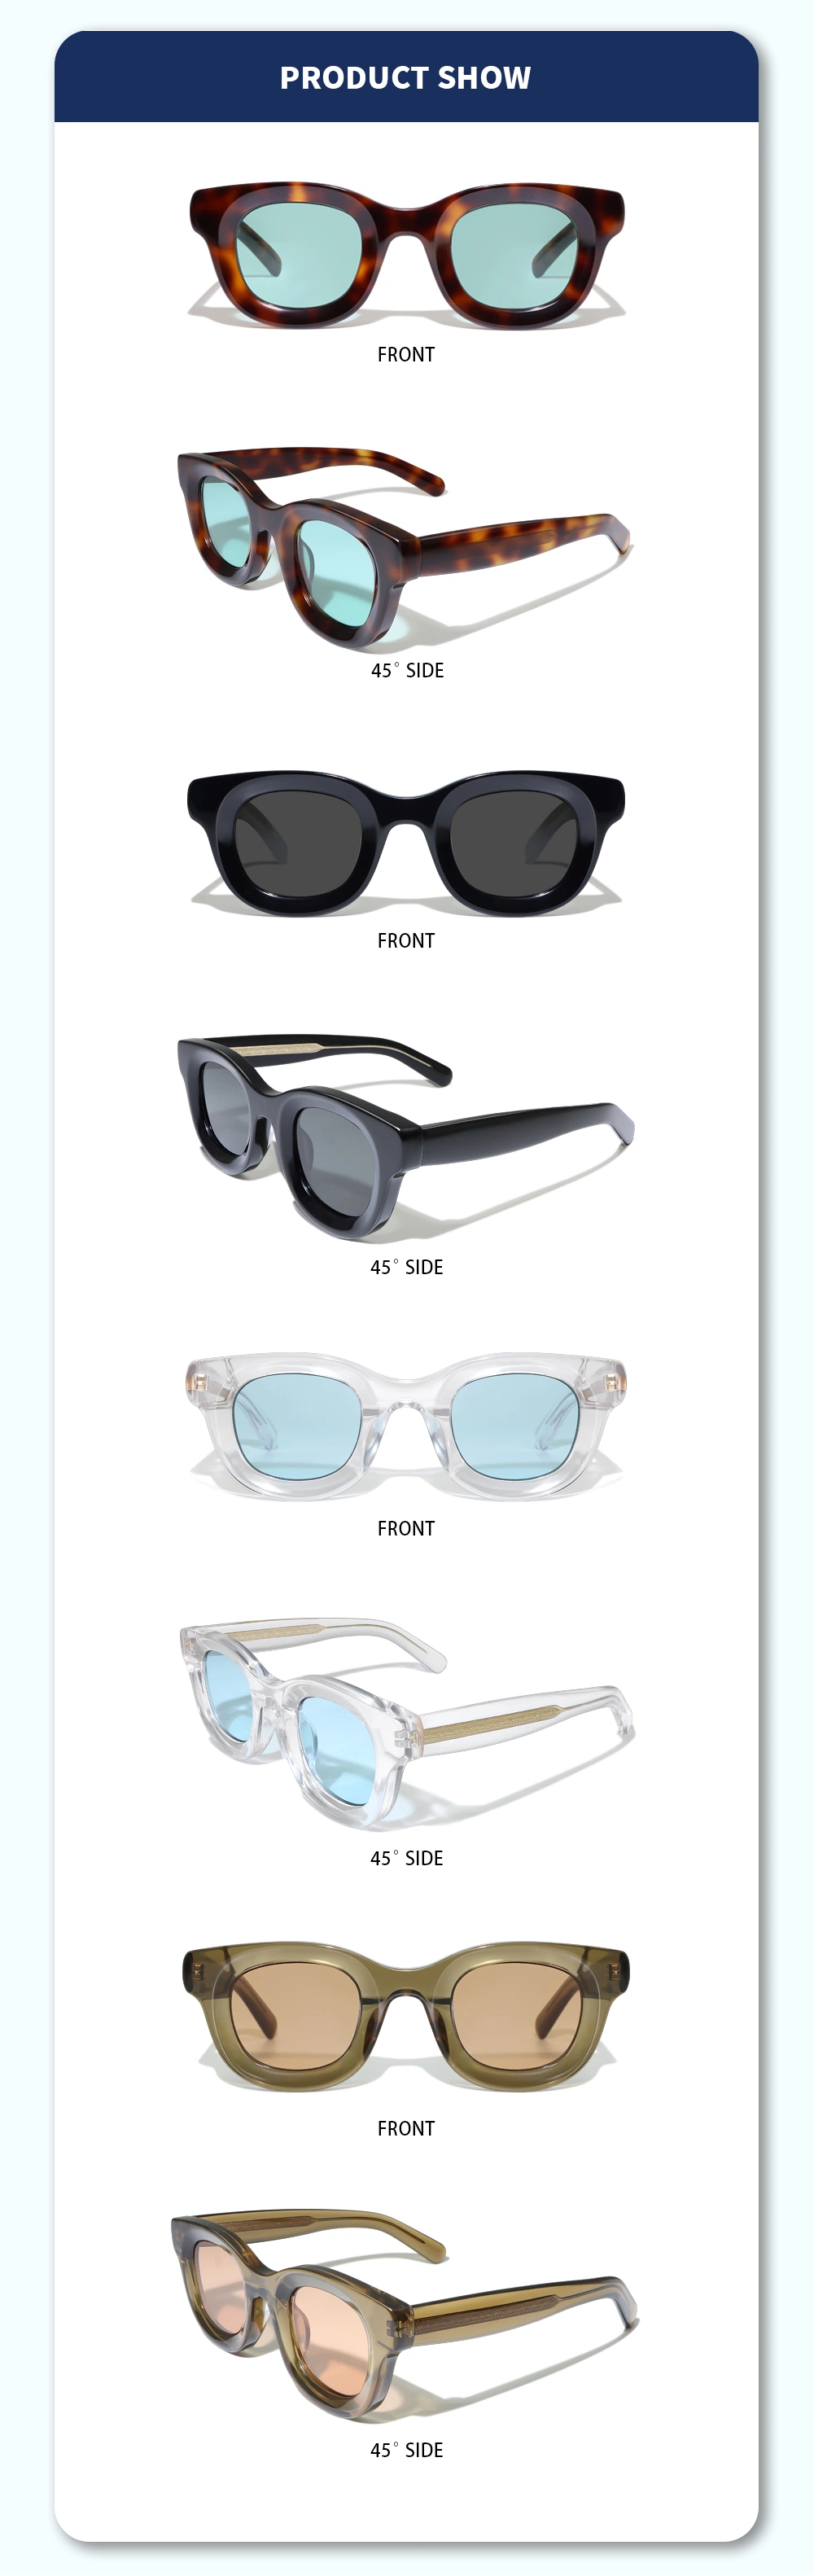 Yeetian Trending 2024 Vintage Bevel Cut Design Ladies Sunglasses Circular Acetate Shades